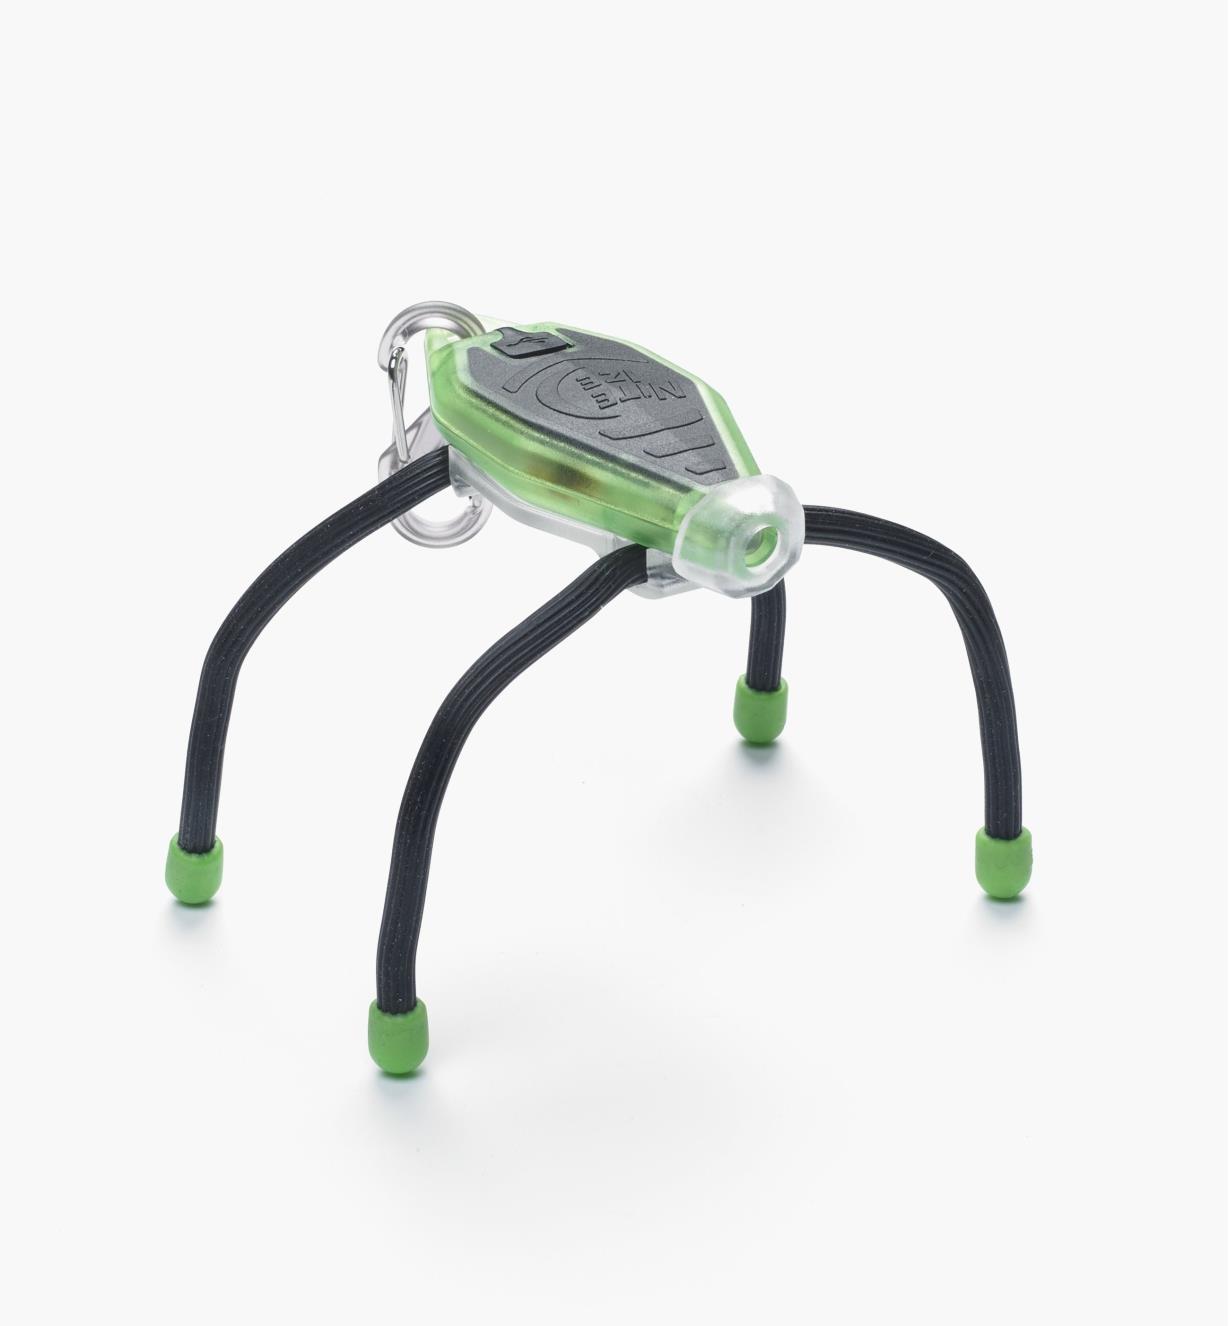 68K0844 - Minilampe de poche rechargeable BugLit, vert